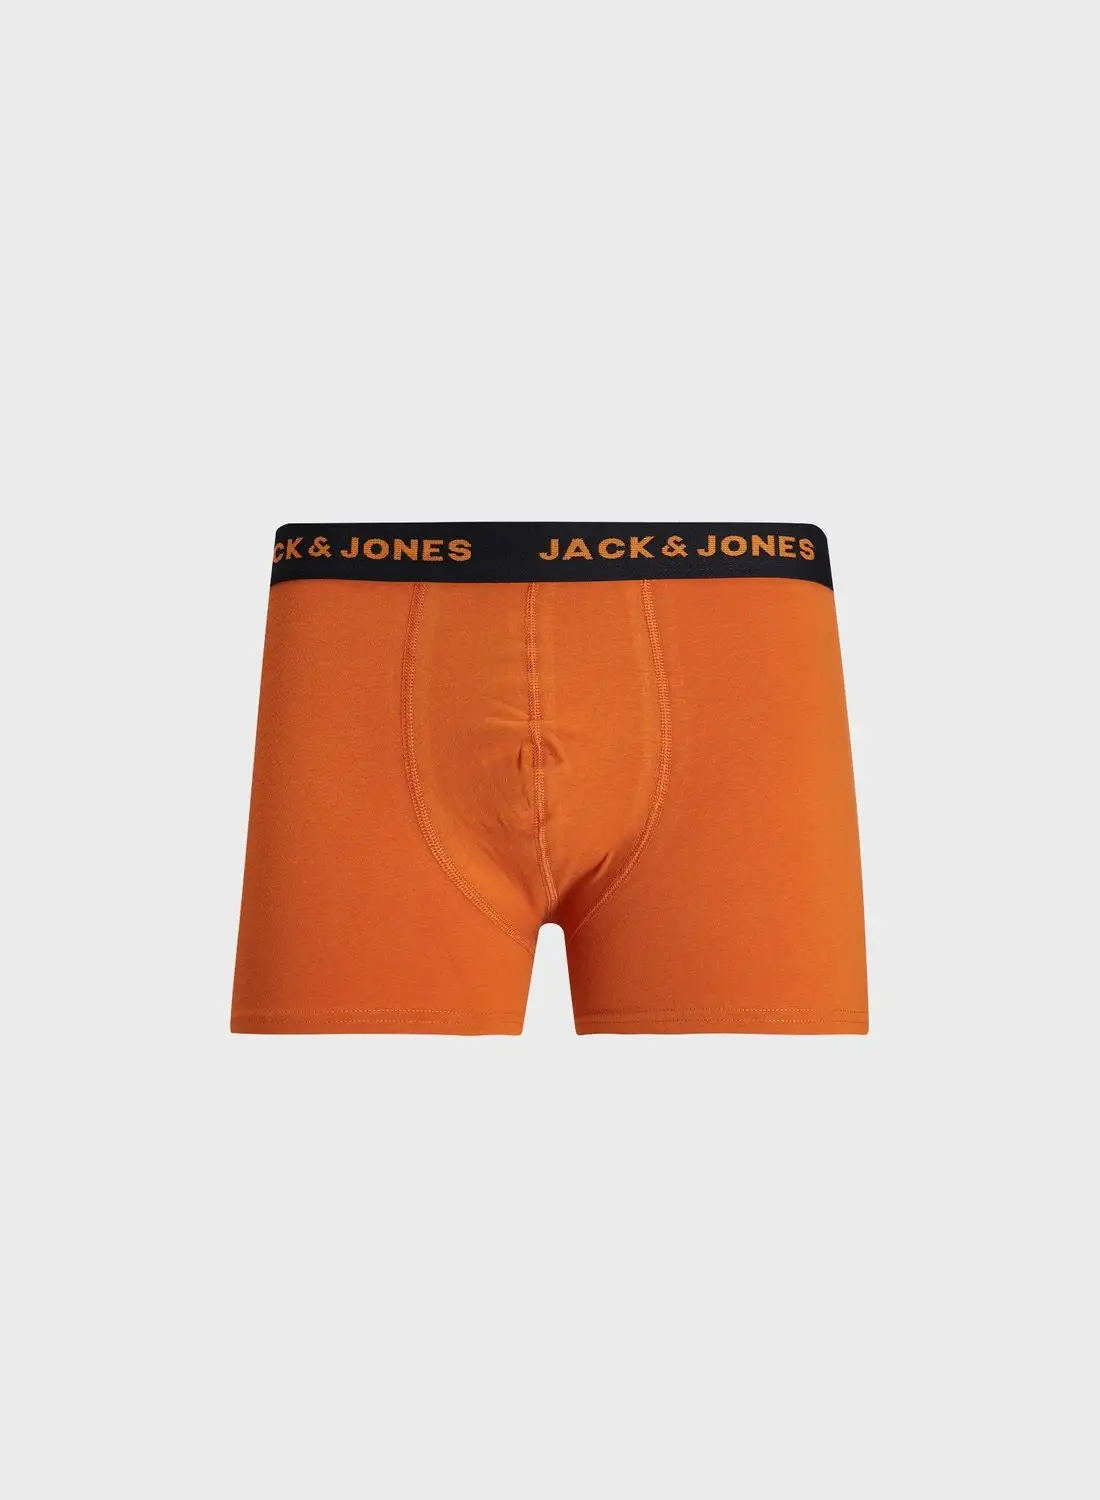 JACK & JONES Logo Band Trunk